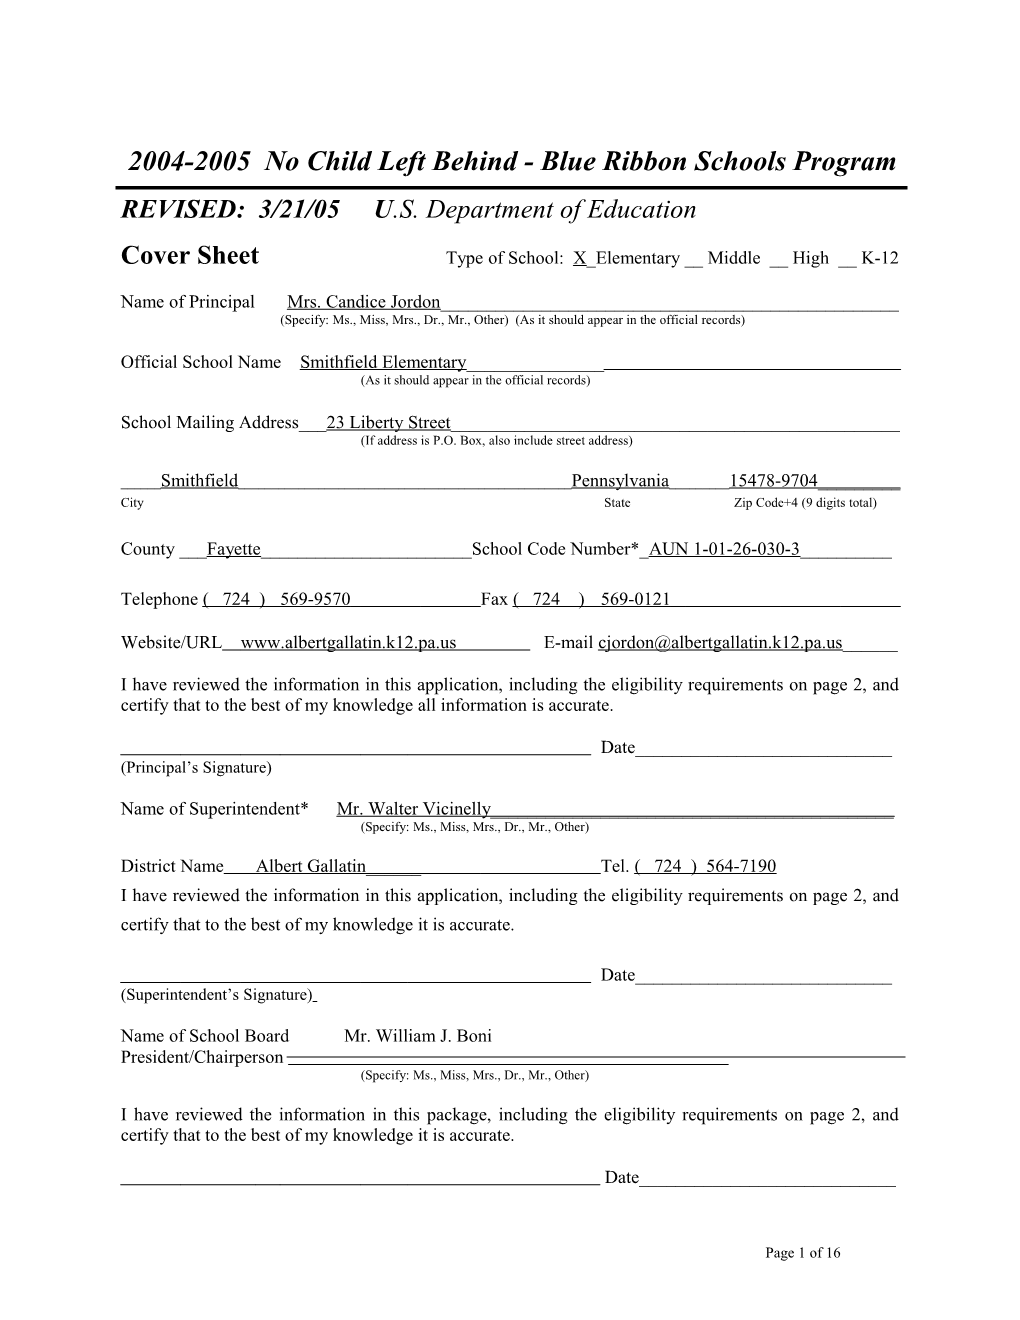 Smithfield Elementary School Application: 2004-2005, No Child Left Behind - Blue Ribbon